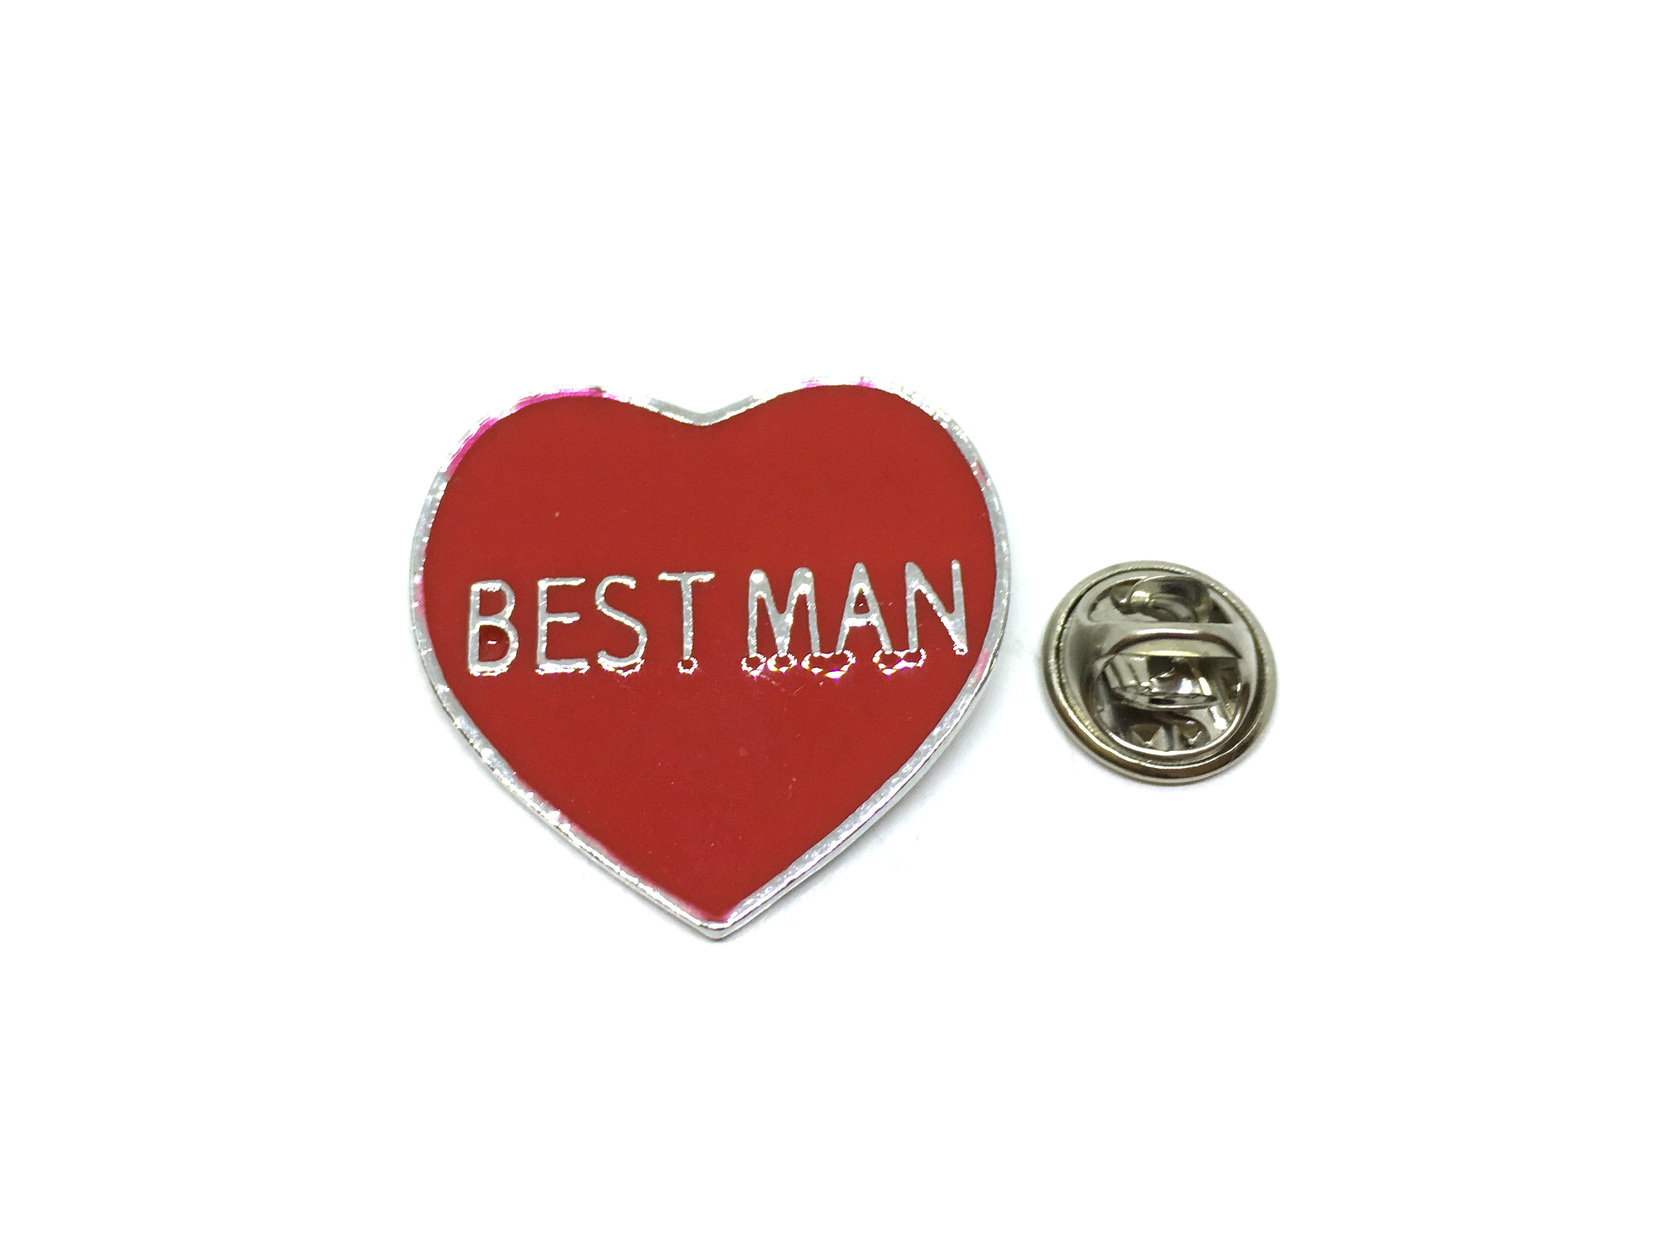 BESTMAN Heart Pin